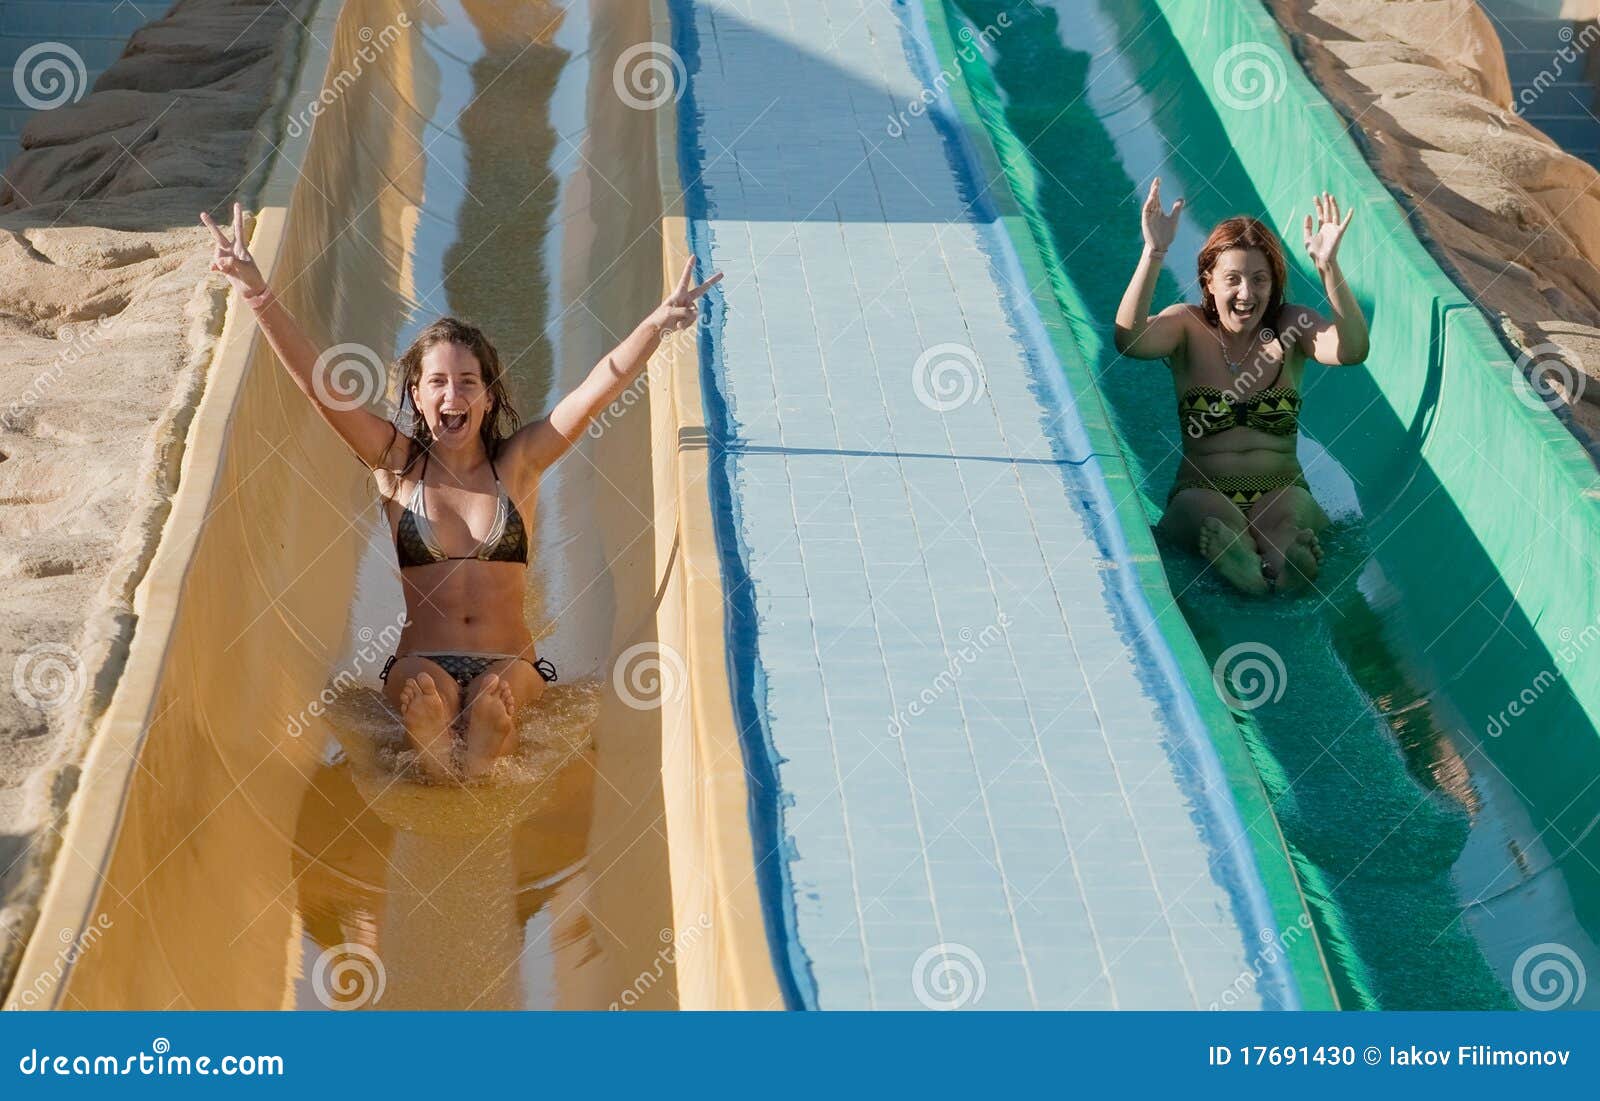 Best of Bikini vs water slide